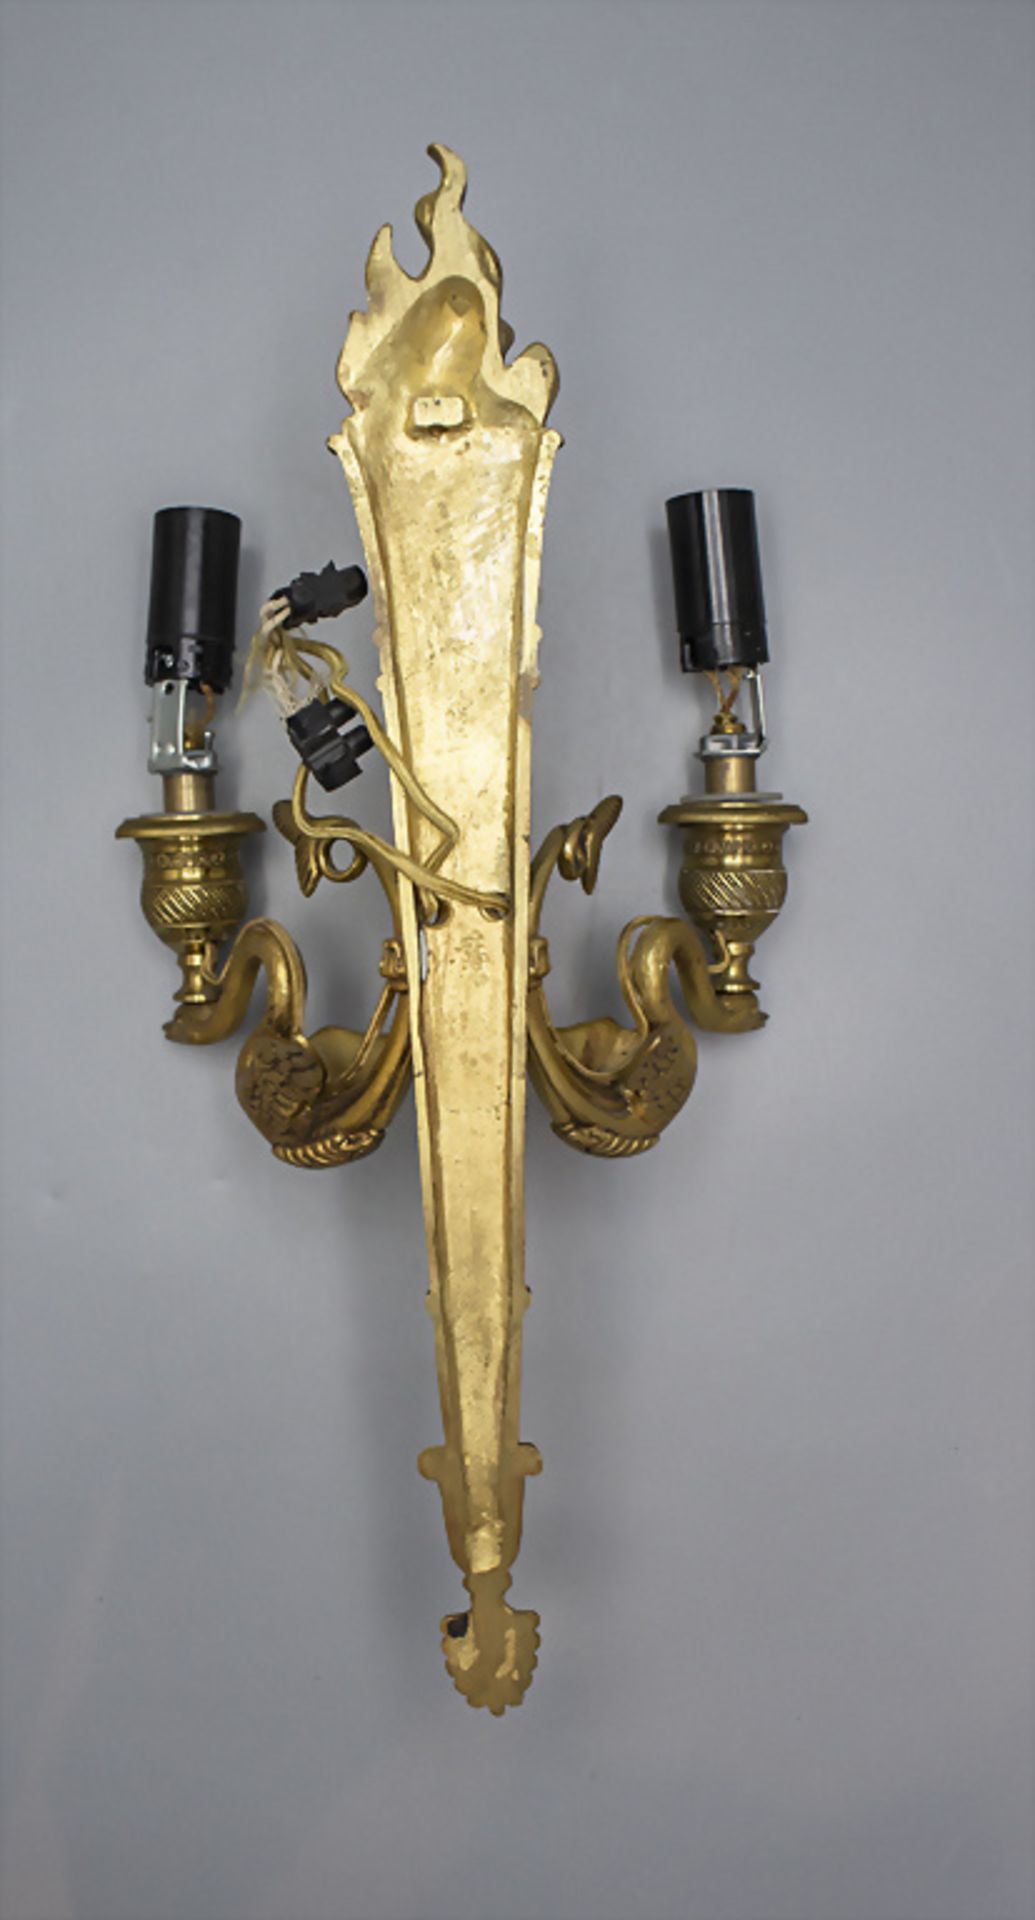 Bronze Wandlampe / A bronze wall lamp, Frankreich, 19. Jh. - Image 3 of 5